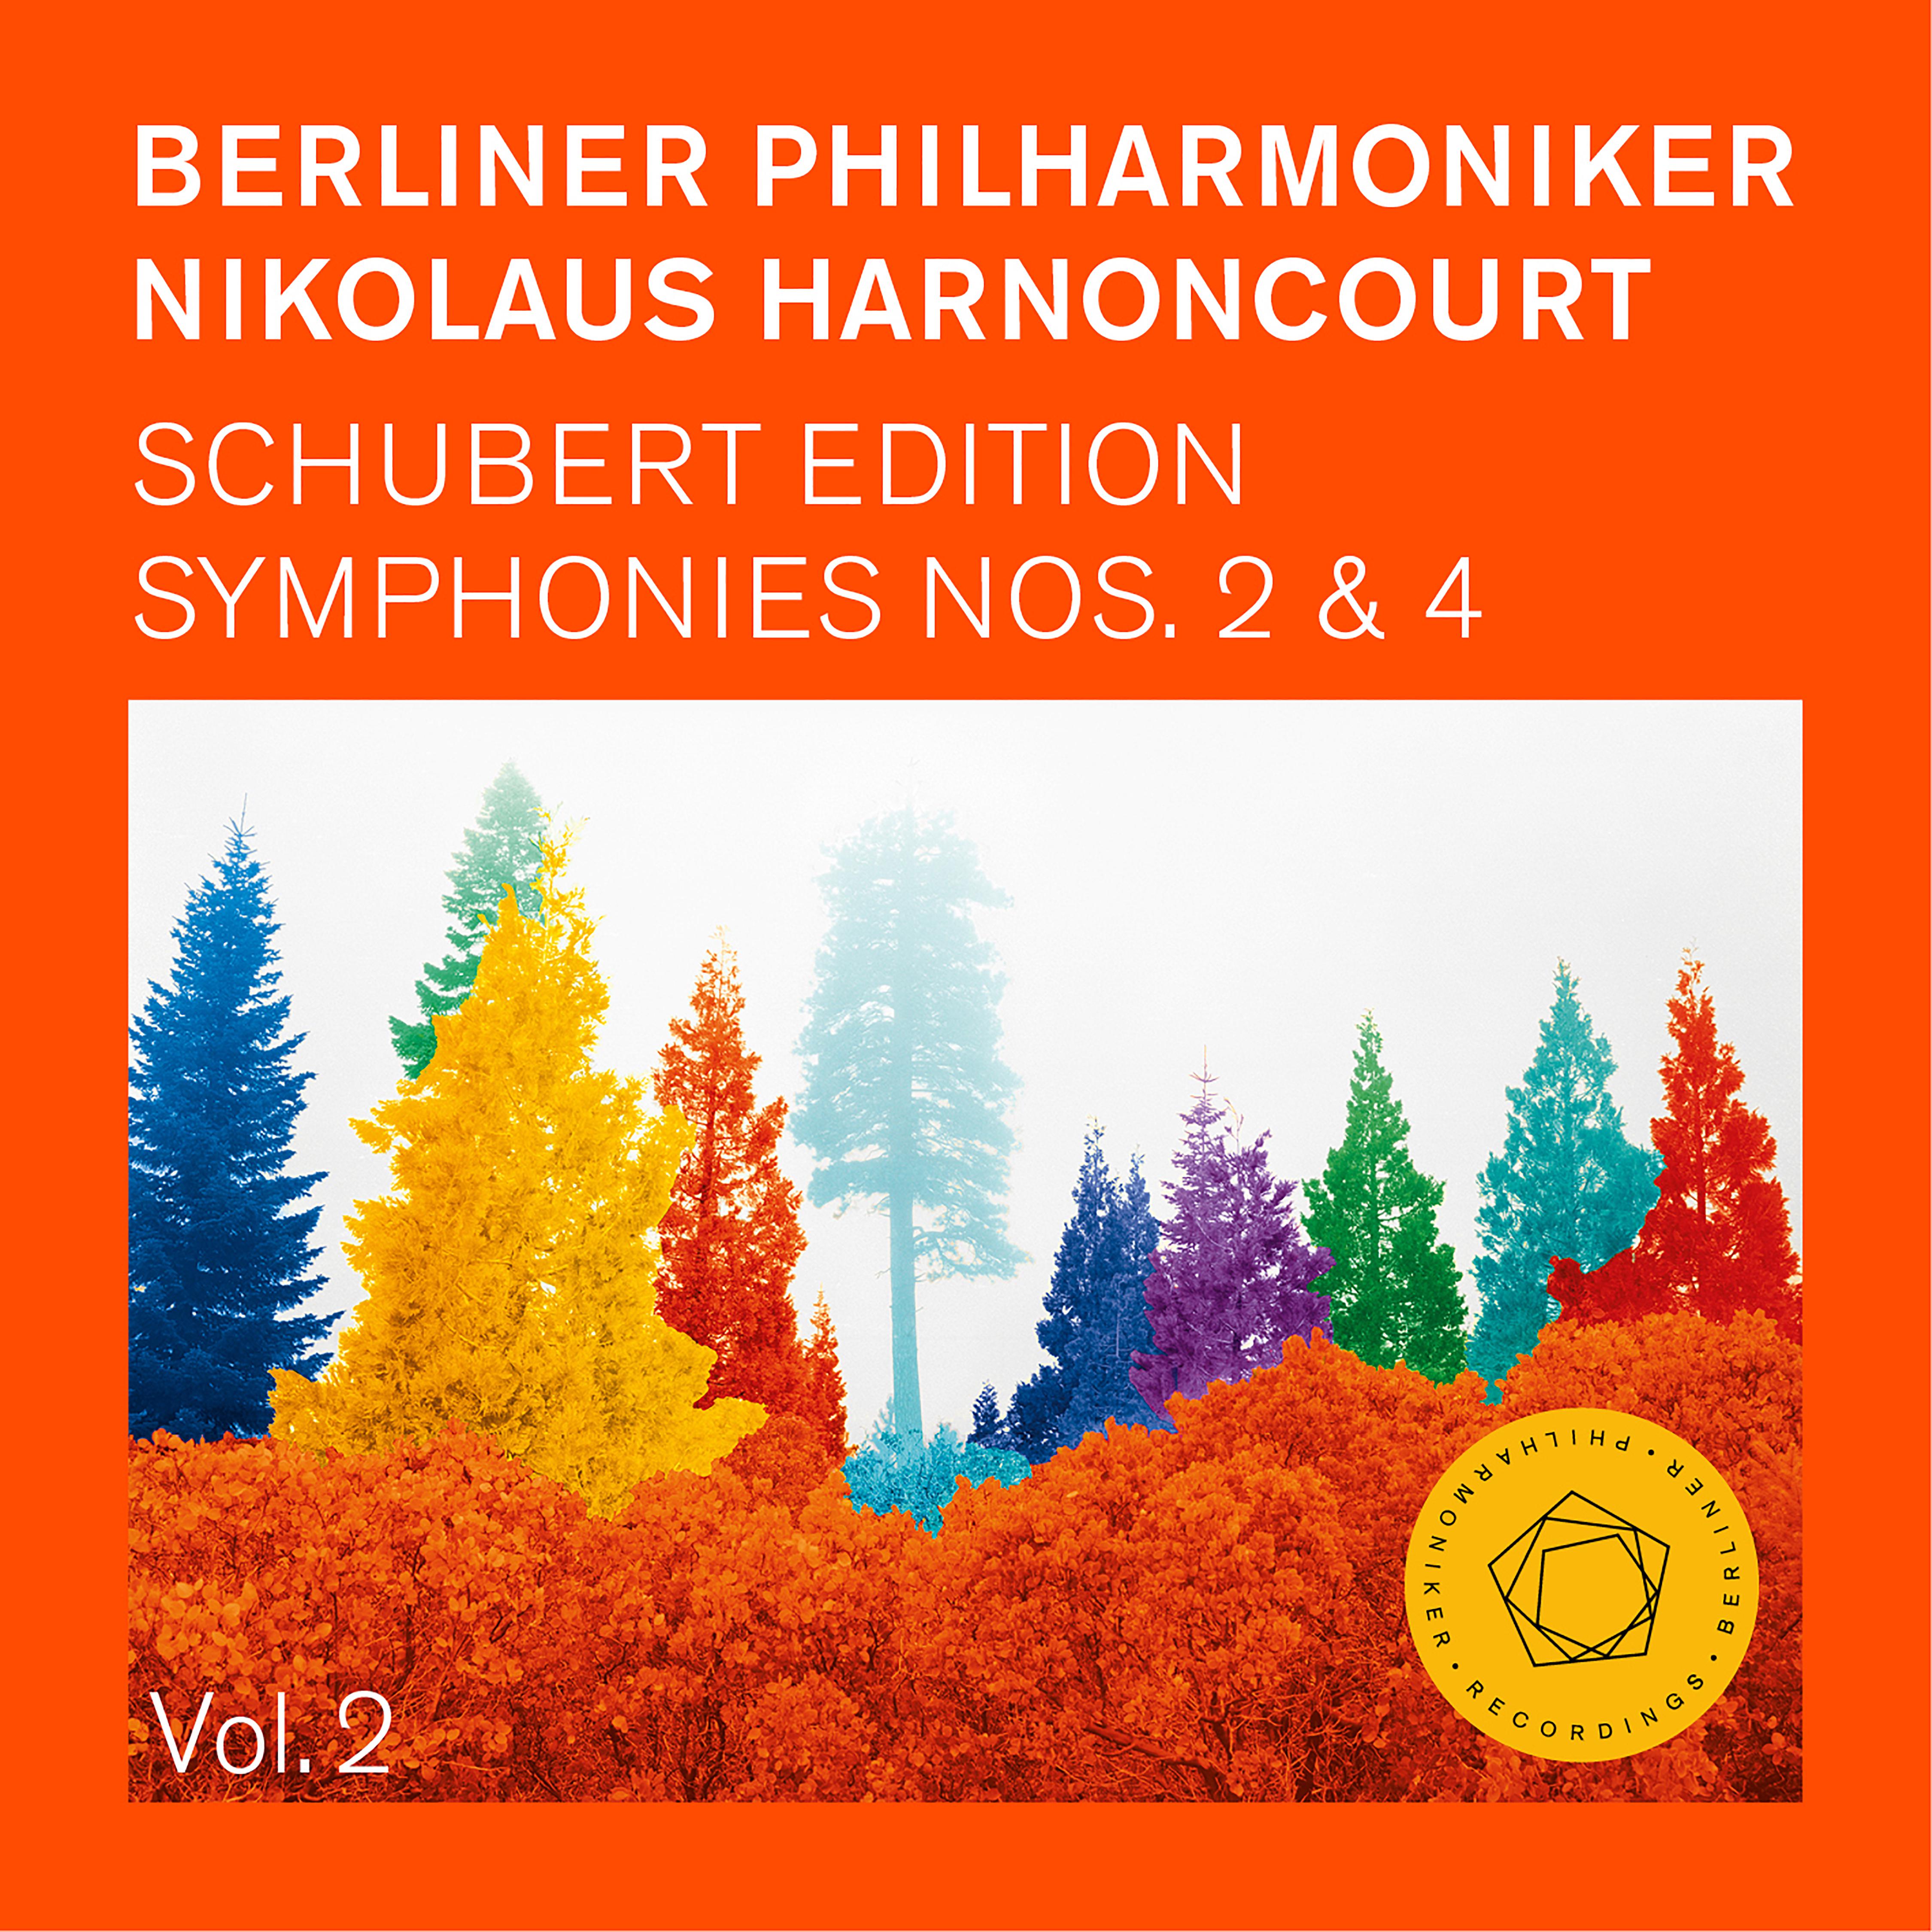 Schubert: Symphonies Nos. 2 & 4 "Tragic"